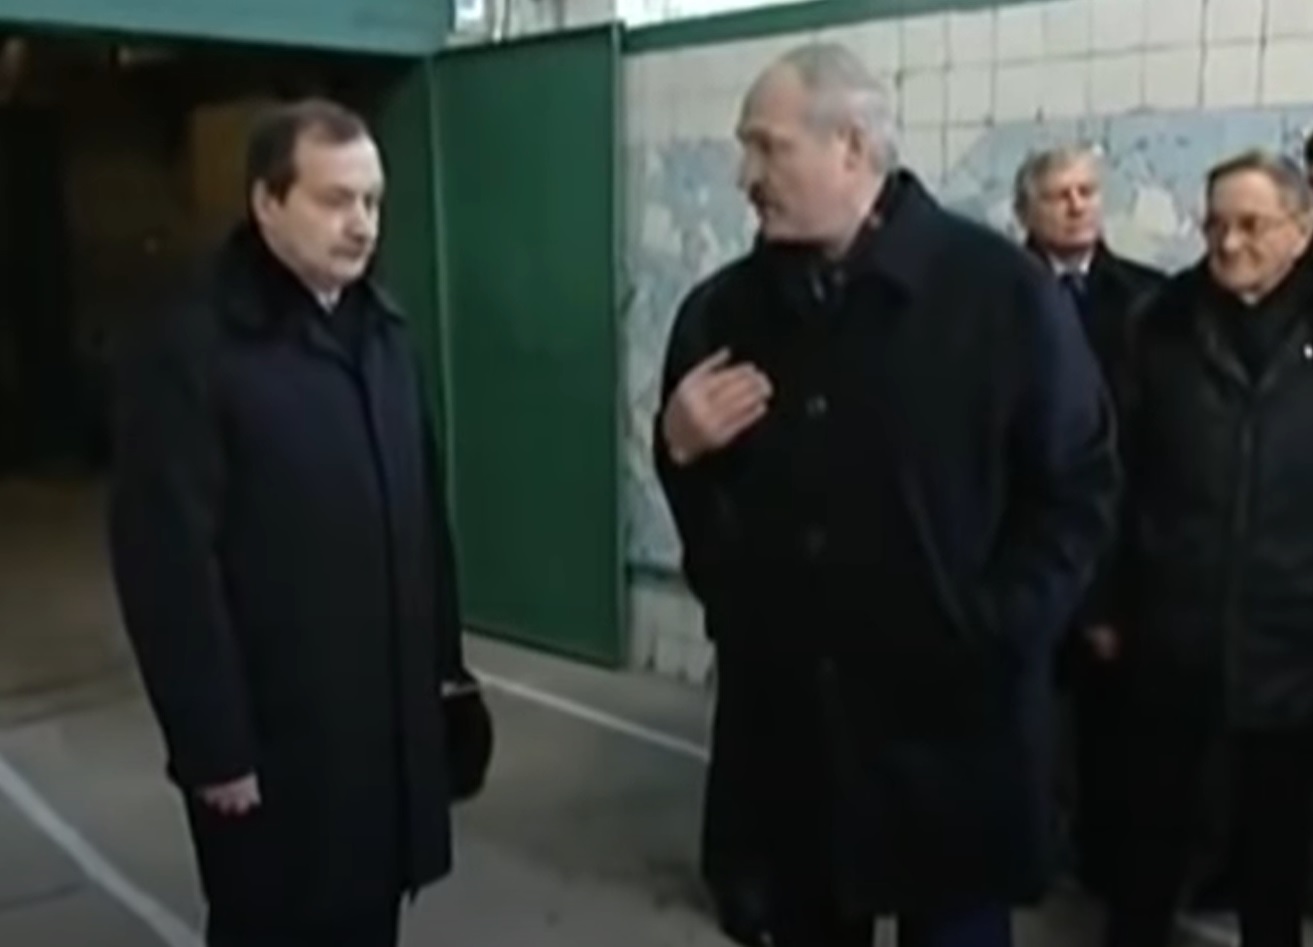 Lukashenko scolding an official